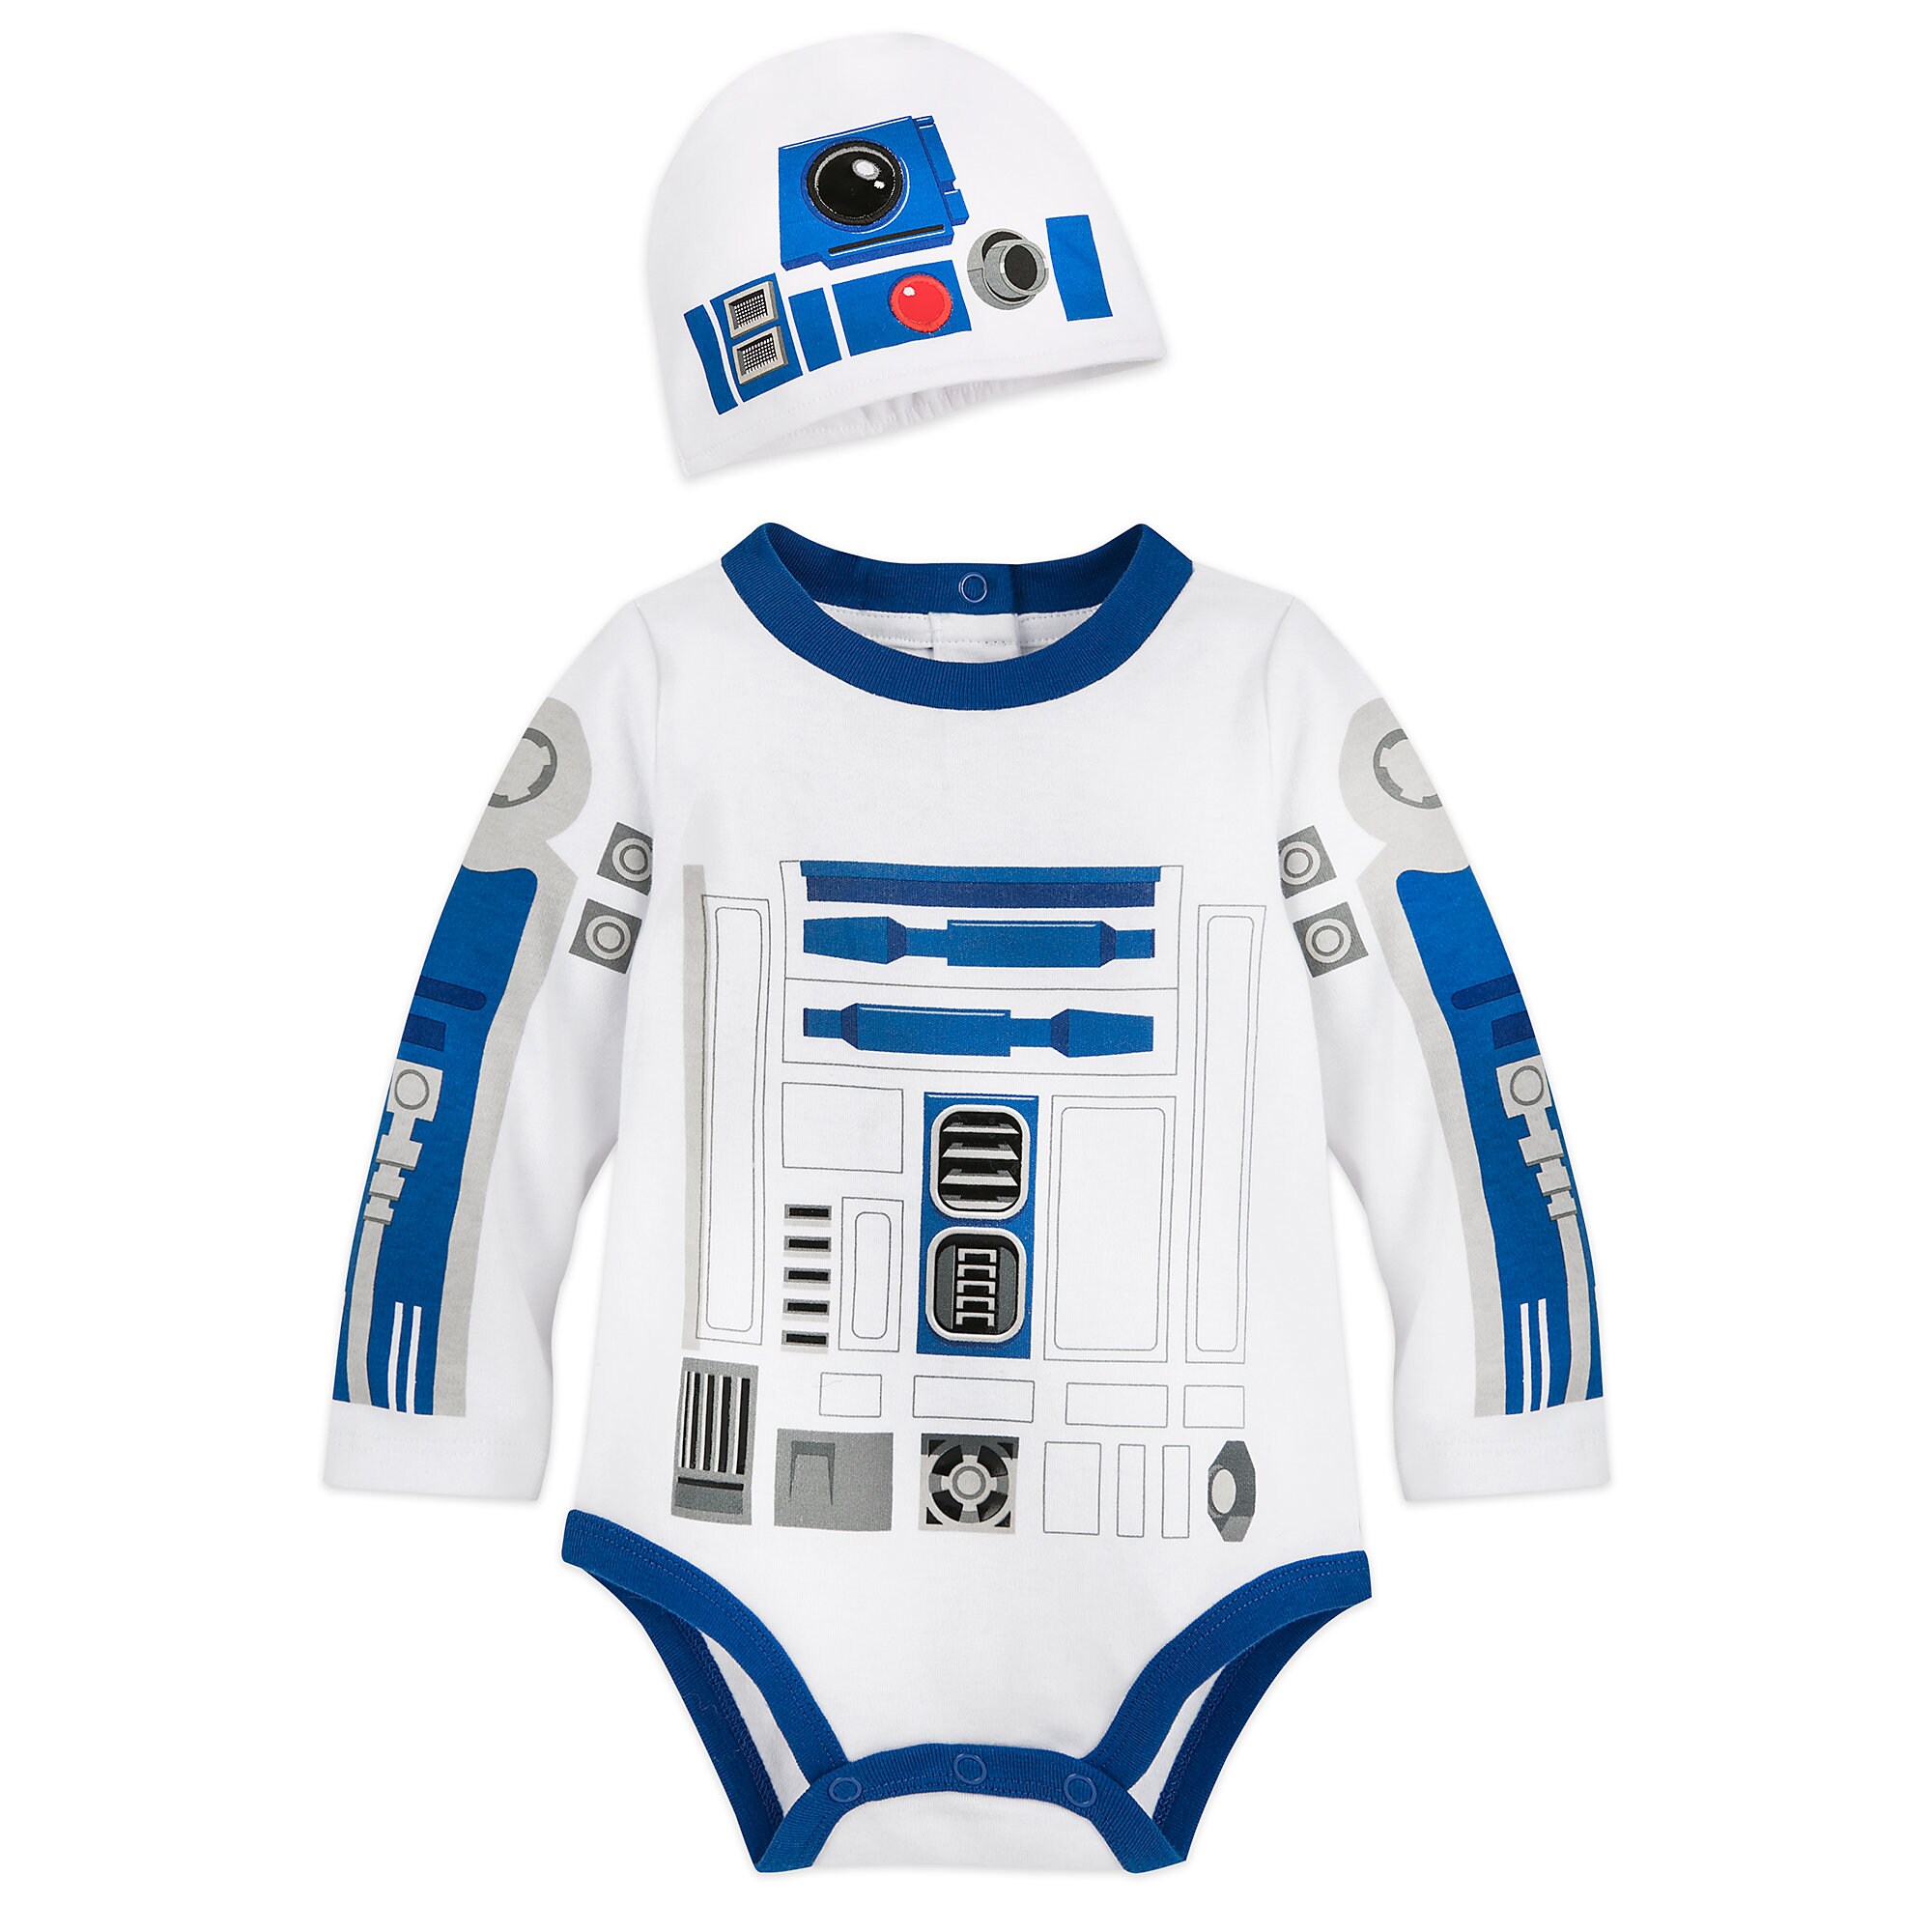 R2-D2 Costume Bodysuit for Baby - Star Wars